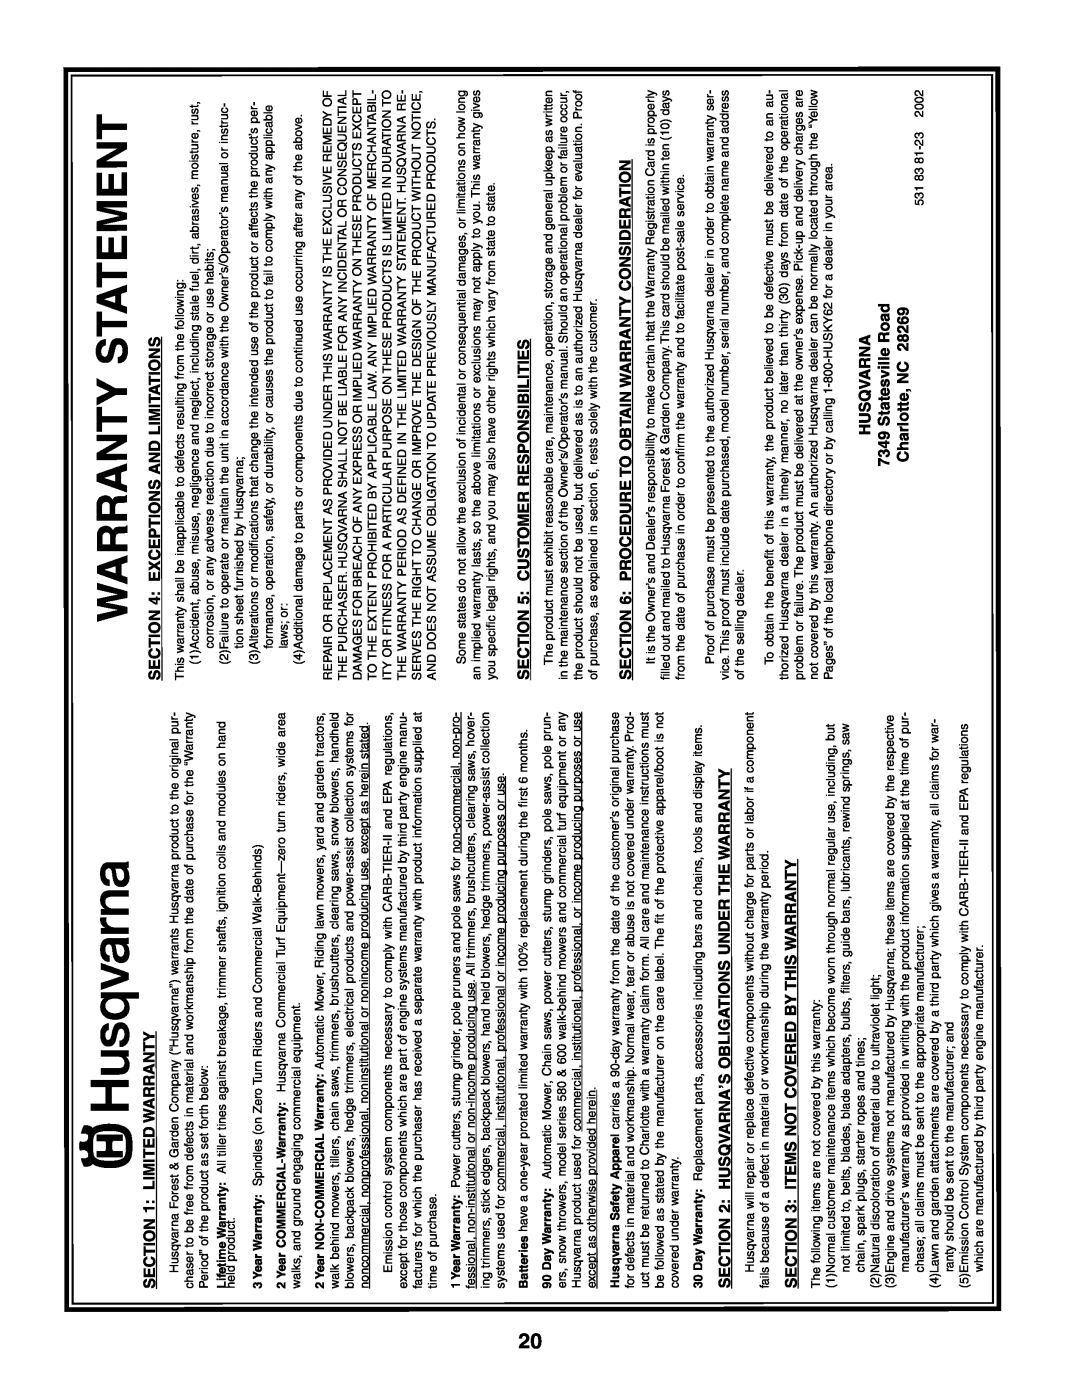 Husqvarna 5521CHV owner manual Statementwarranty, 2002 